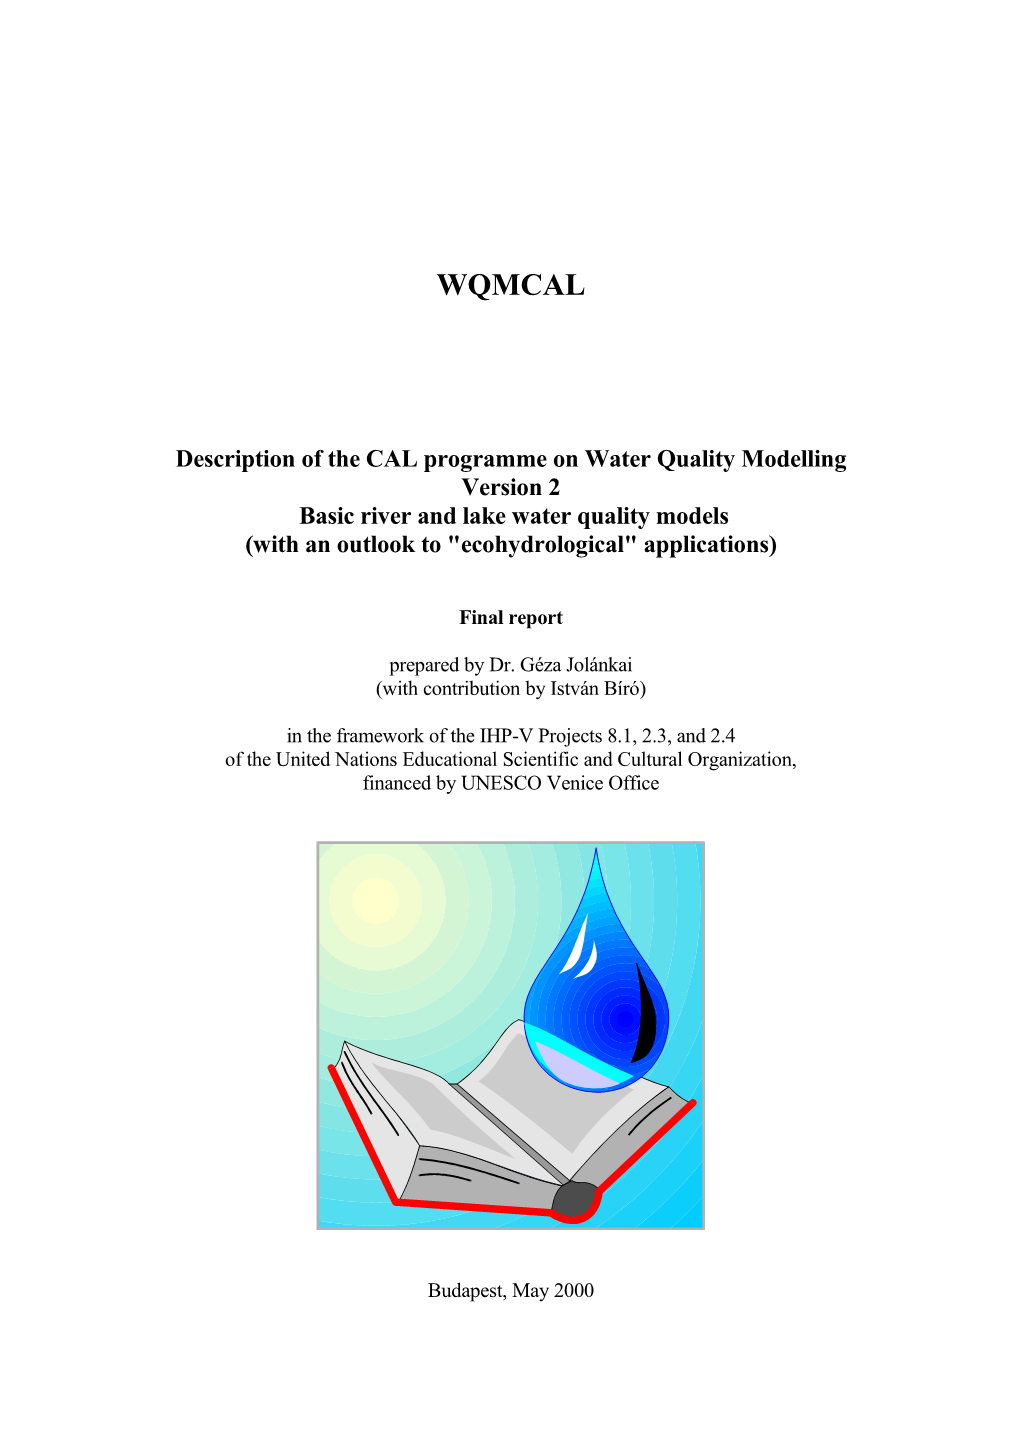 WQMCAL Version 2 User Manual